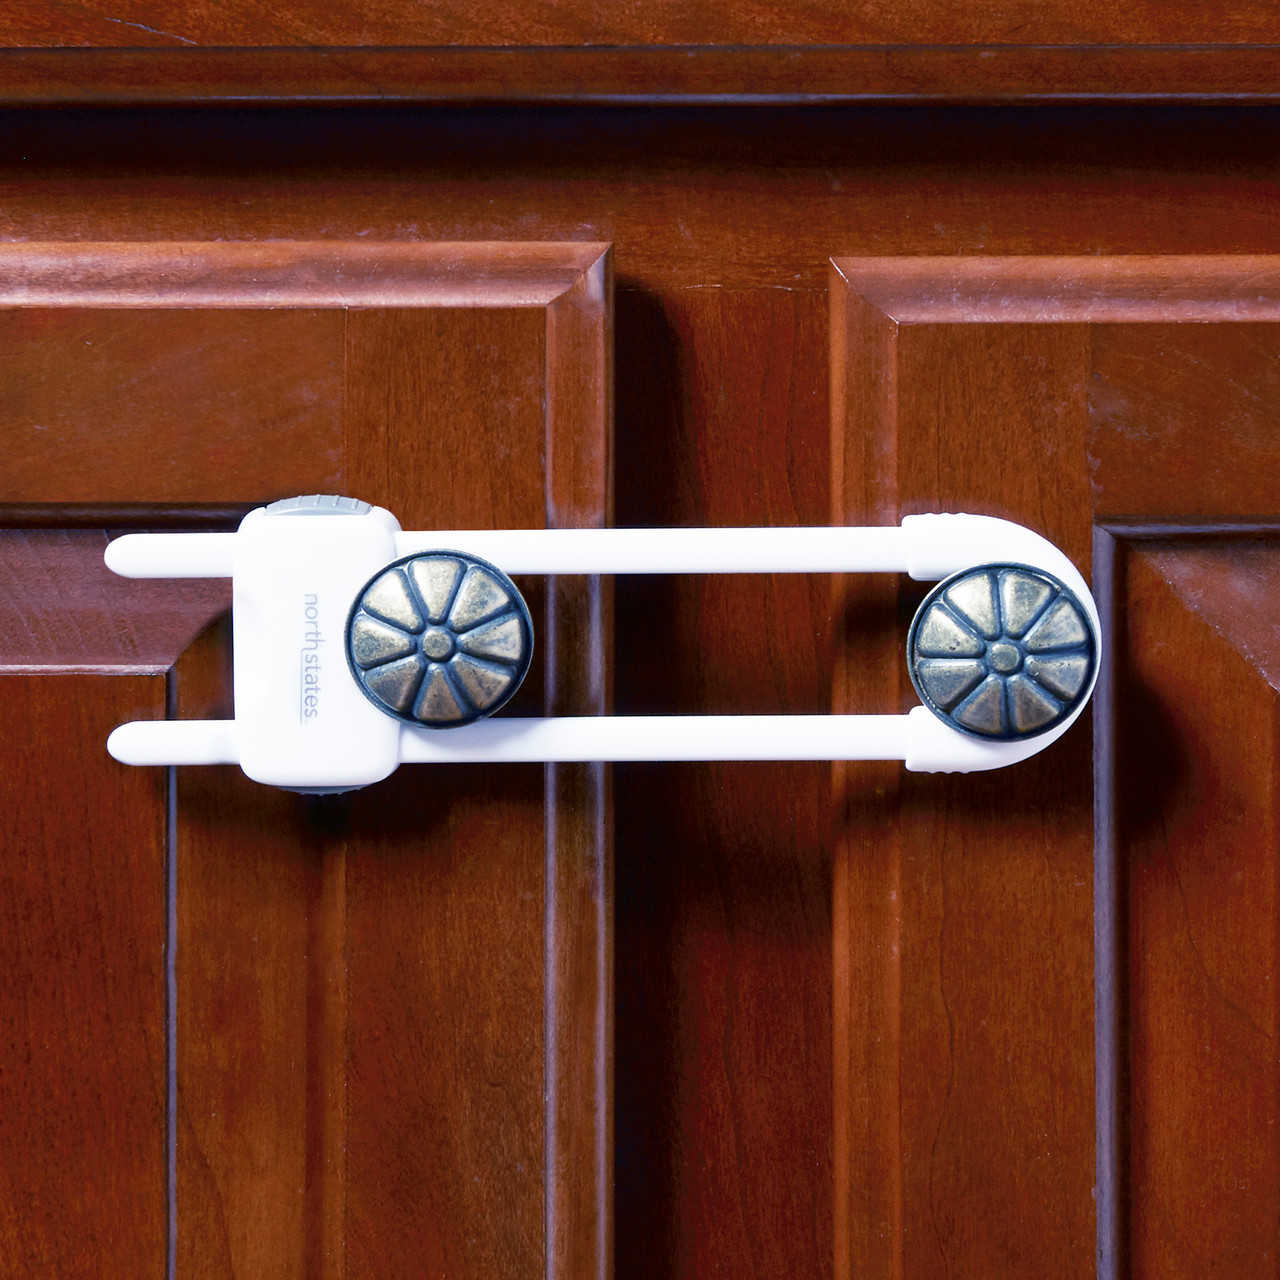 Top Shop Baby Safety Cabinet Locks Drawer Door Locks for Baby